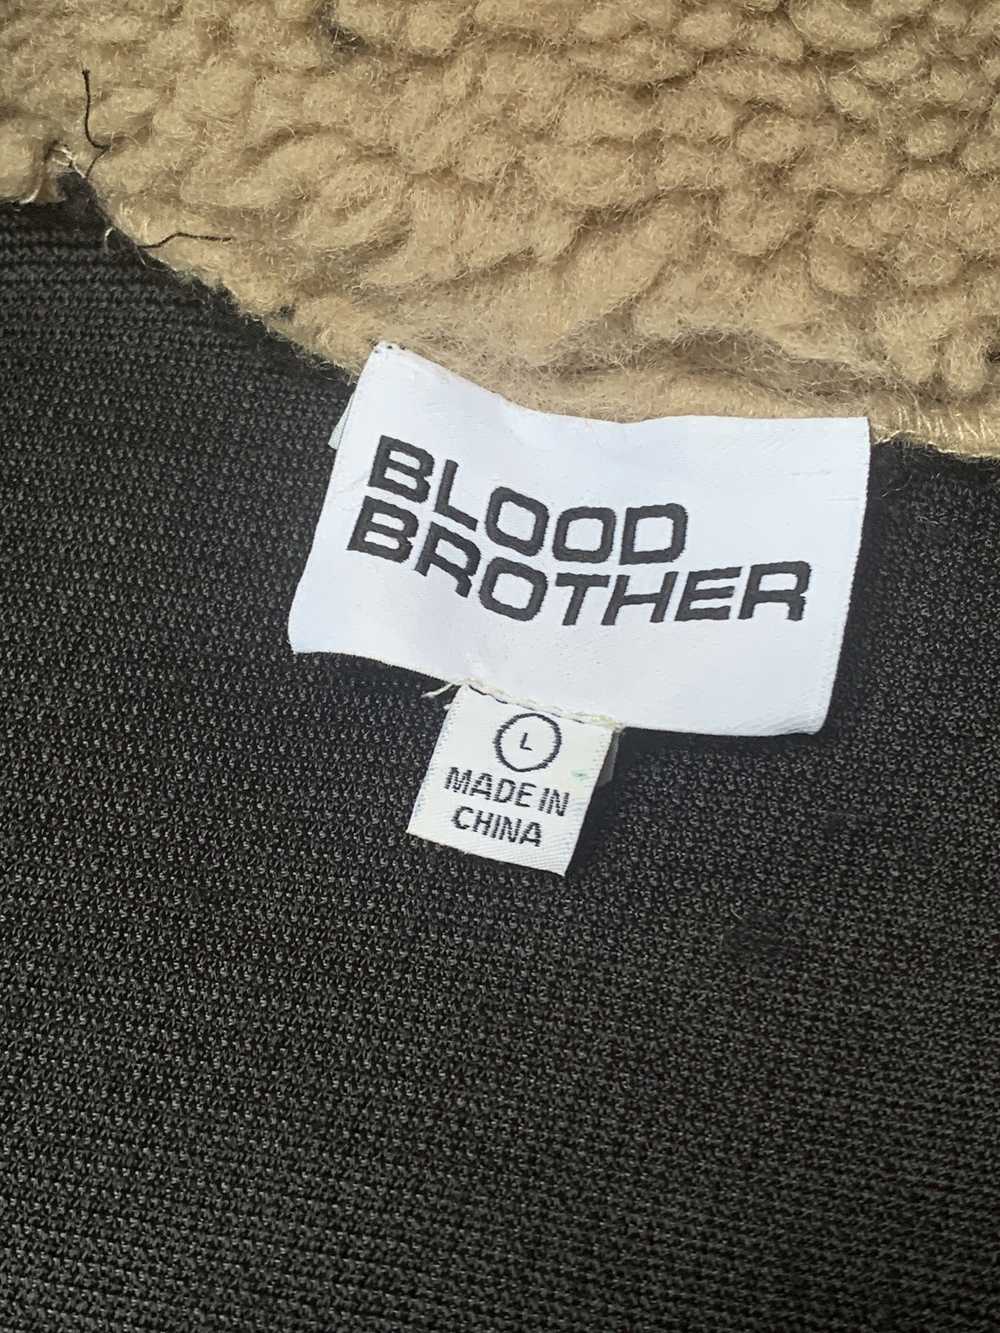 Blood Brother Blood Brother fleece jacket - image 4